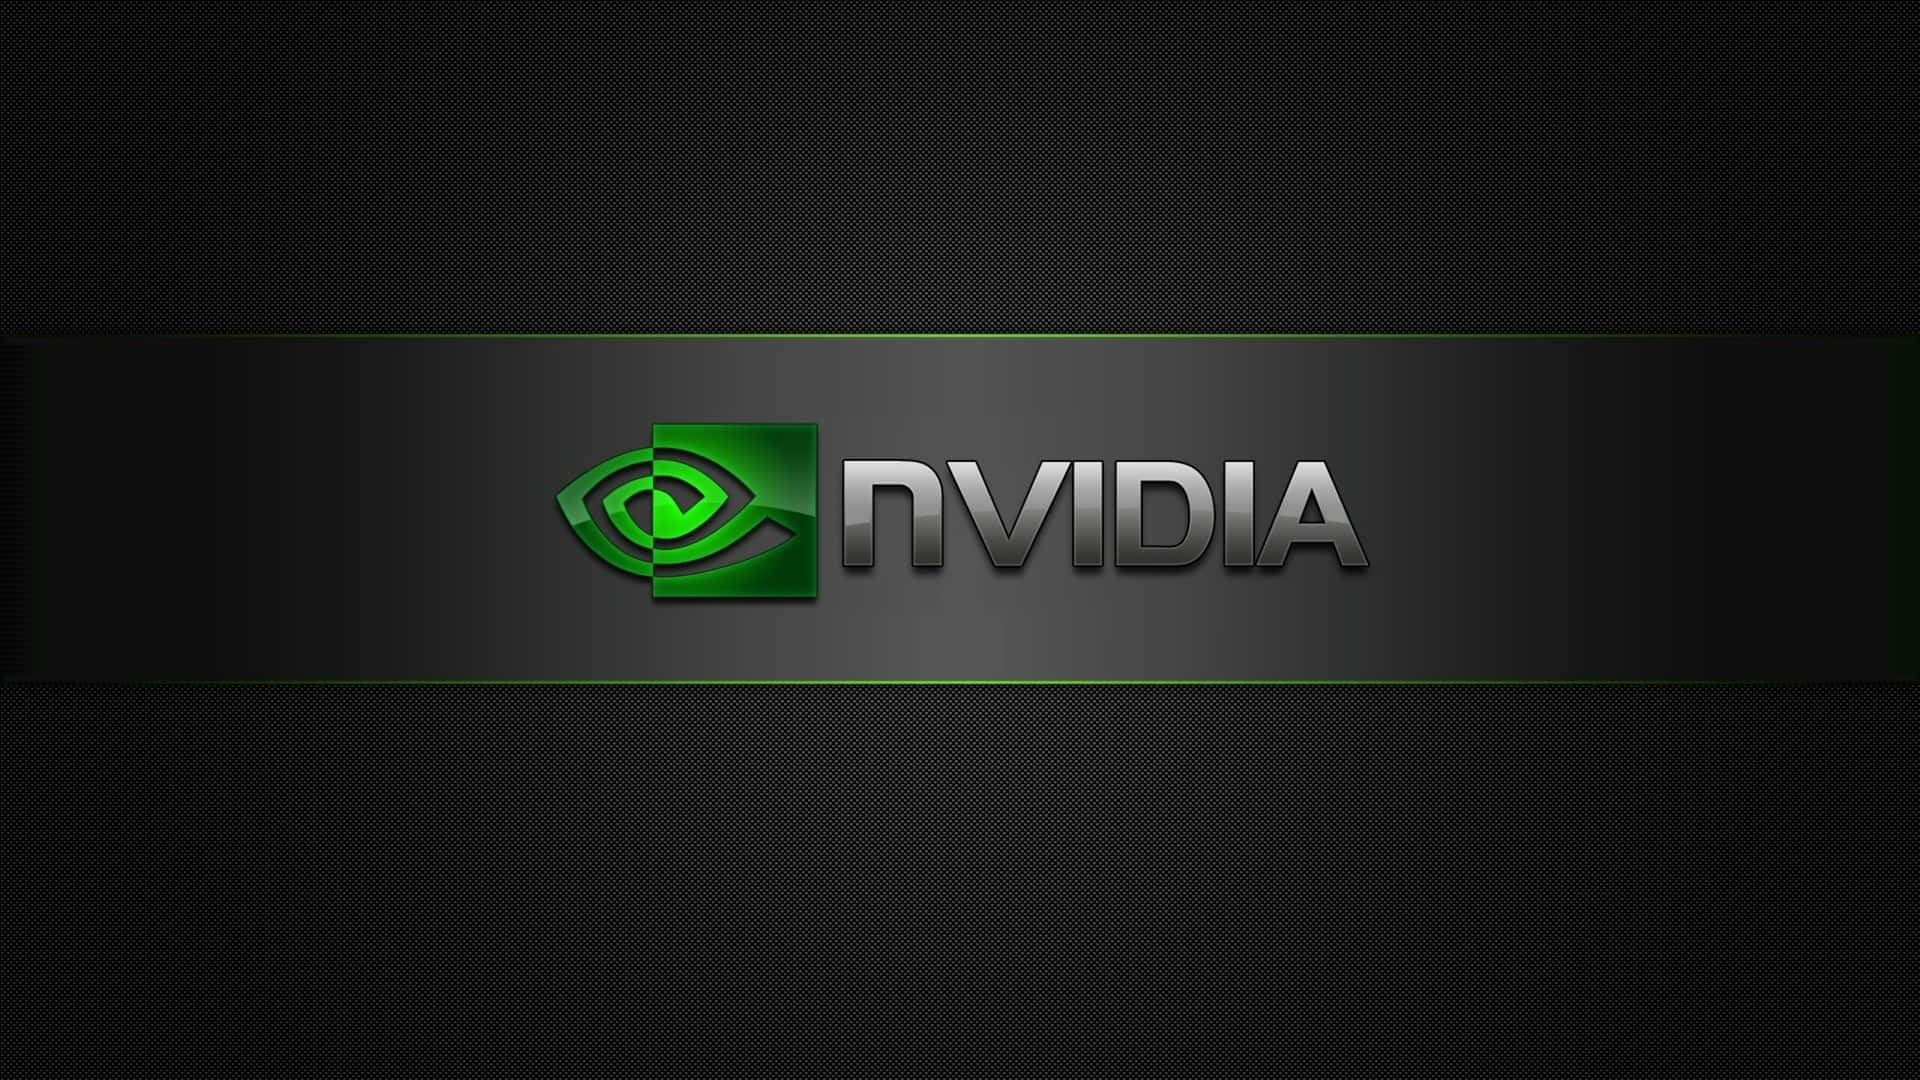 nvidia logo on a black background